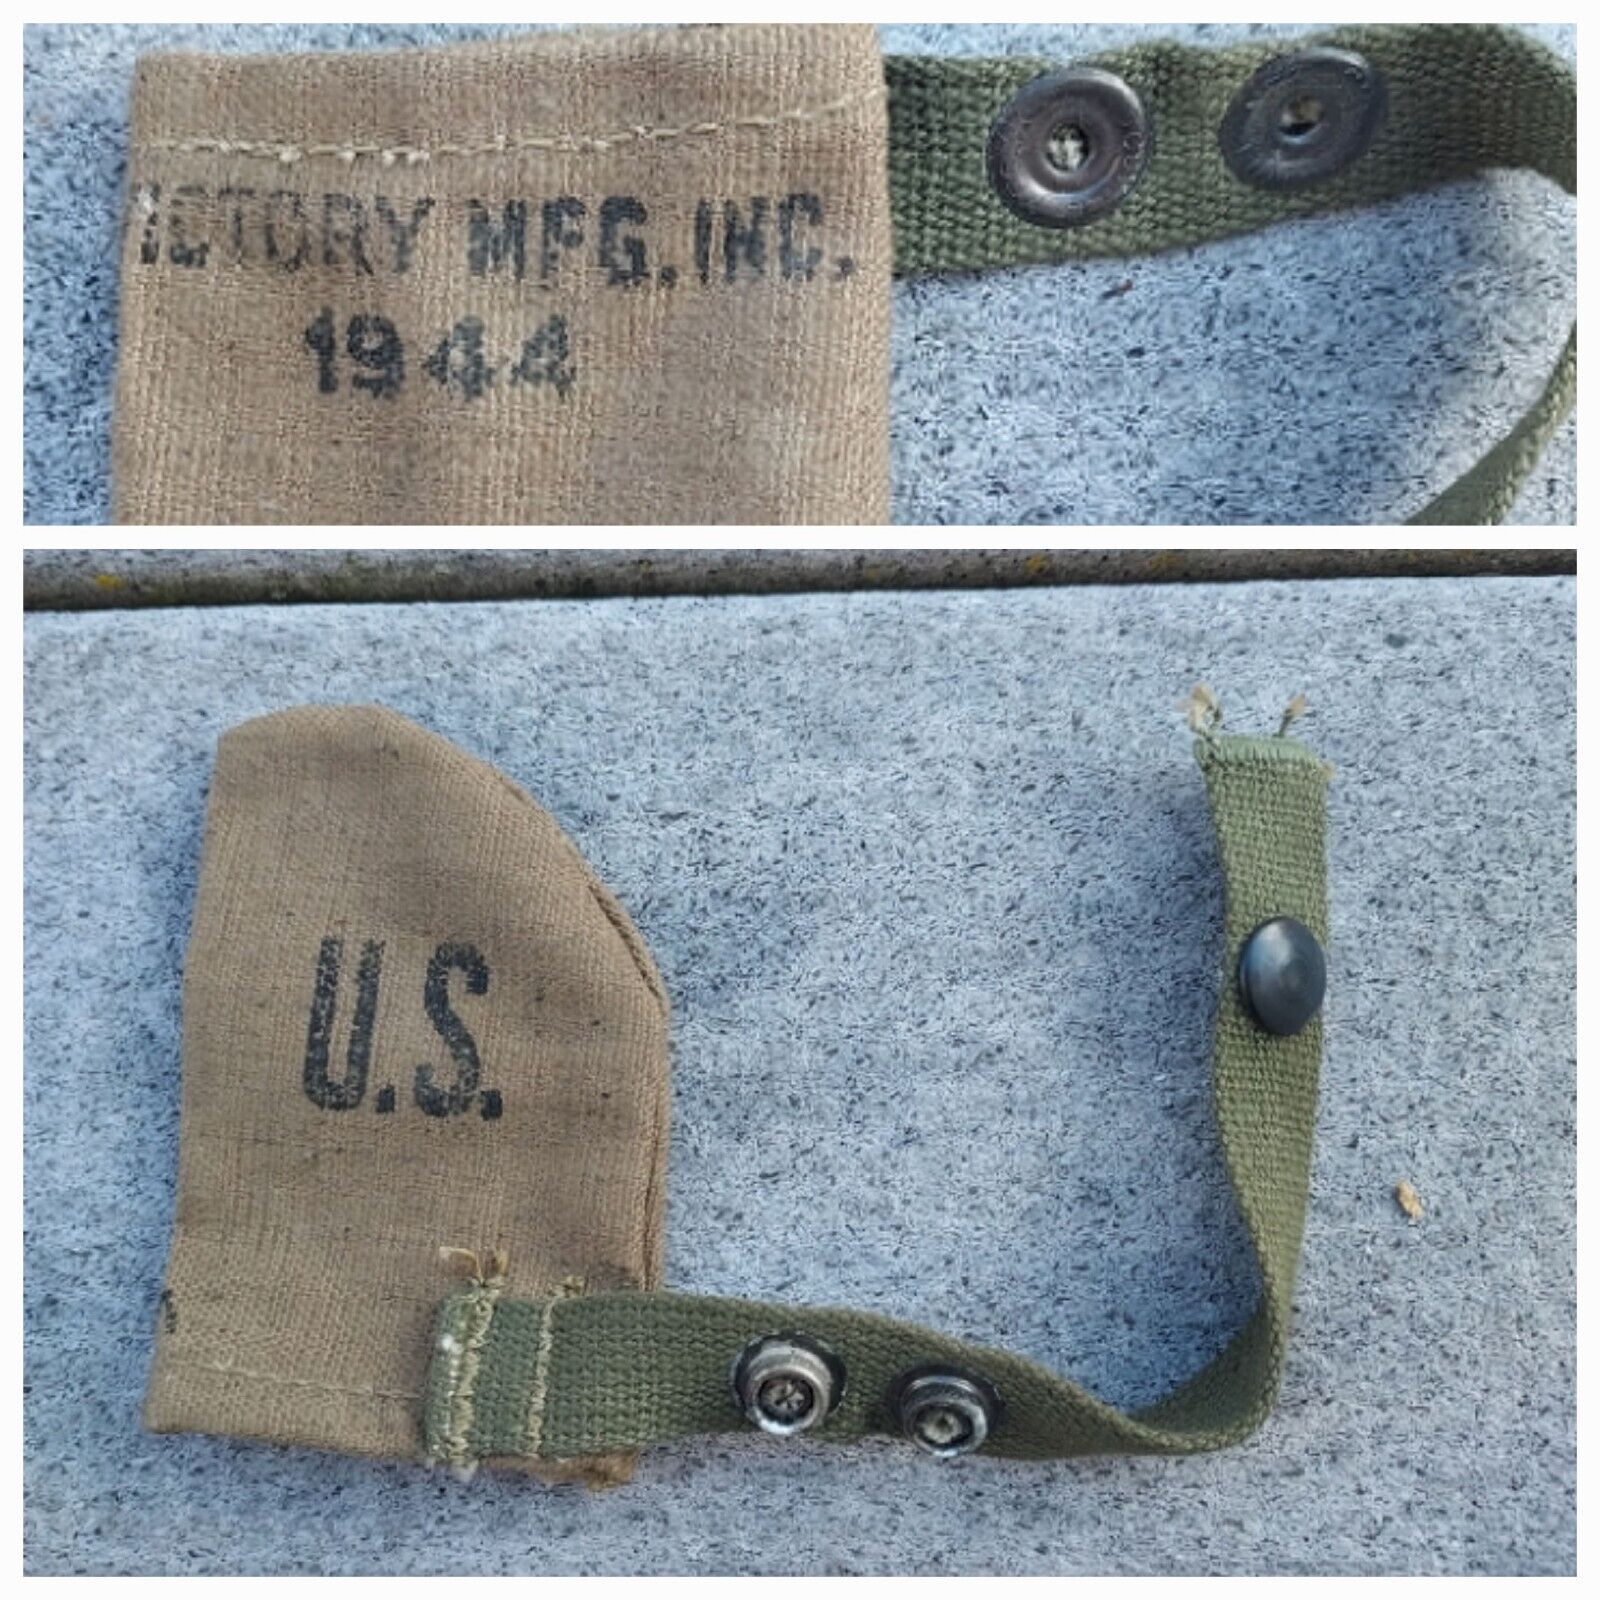 WW2 WWII US M1 Carbine Rifle Muzzle Cover Victory MFG. INC. 1944 M1 Garand M1903